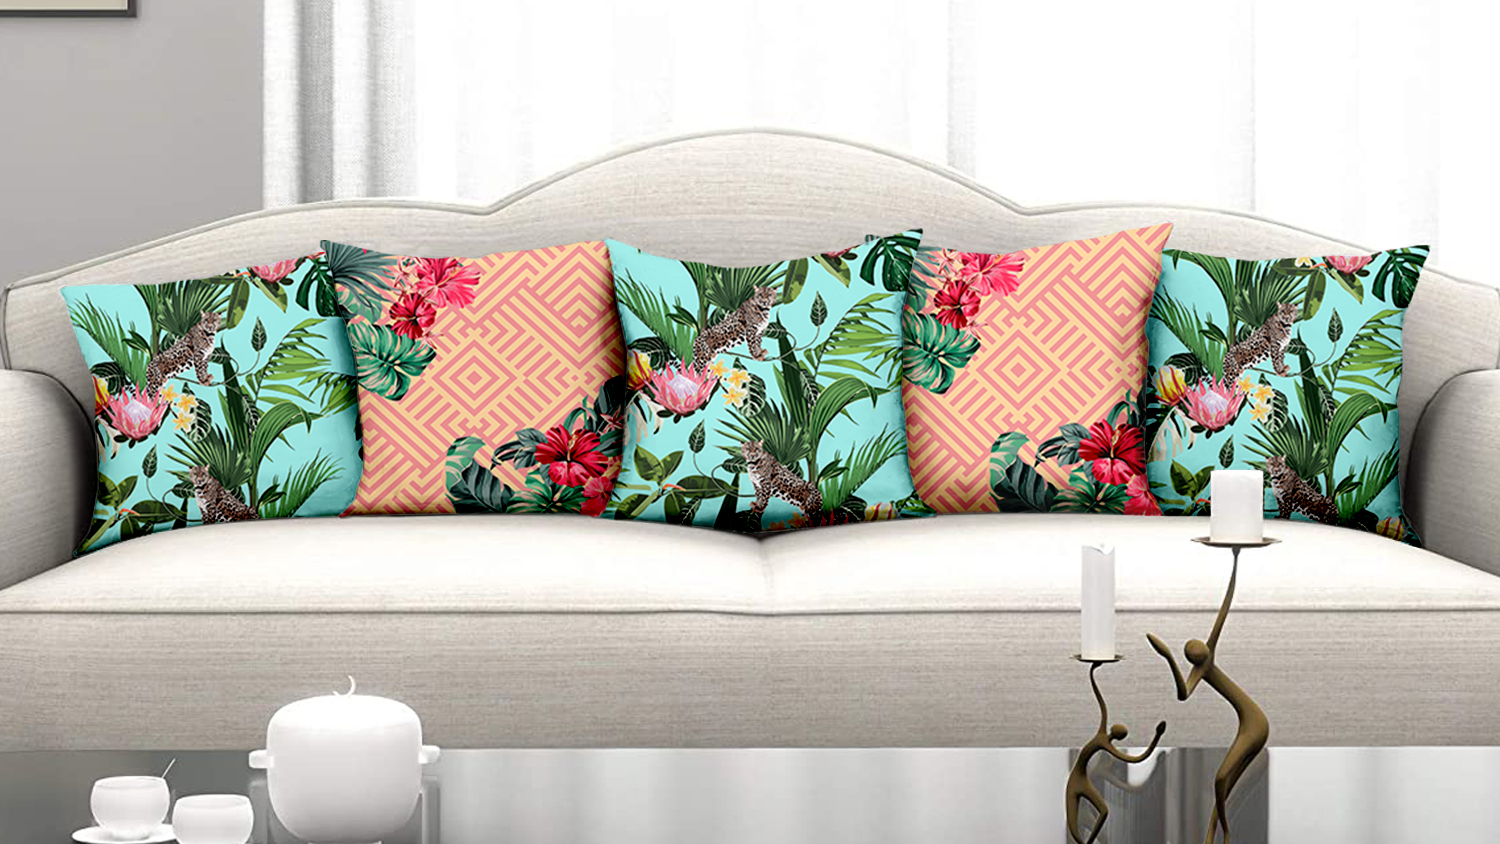 Homewards Bagheera Tropical Cushion Cover Set of 5 – Poly Satin, Sky Blue and Pink